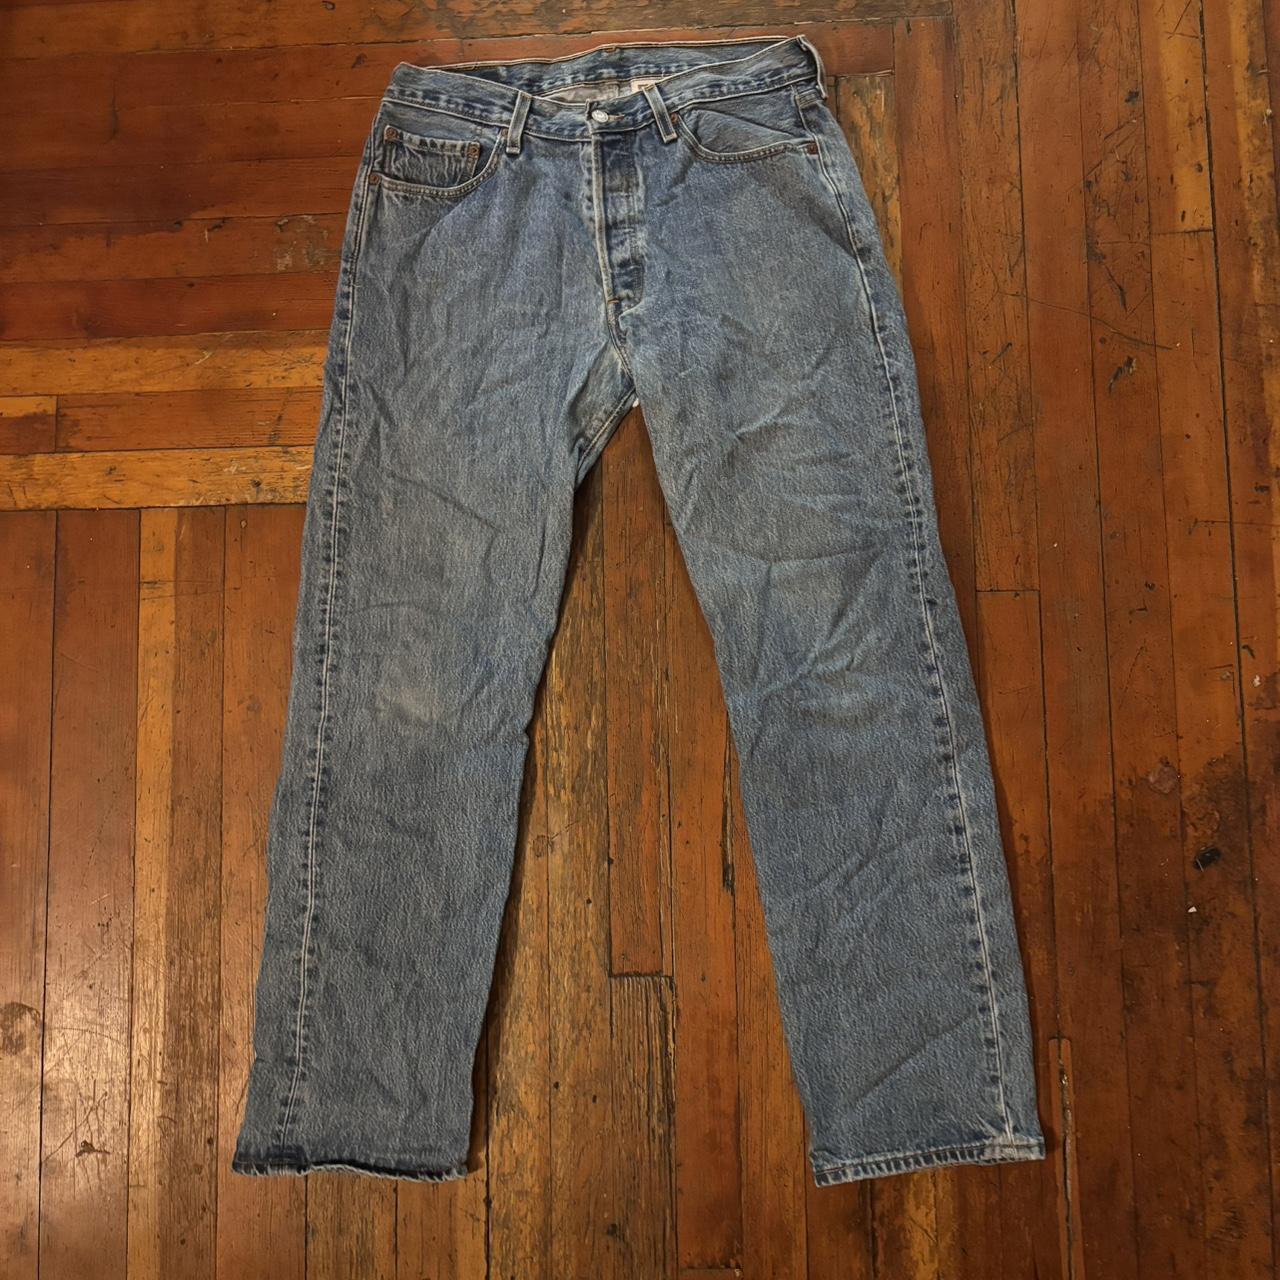 Vintage 501 Levi’s blue jeans size 34x32 in really... - Depop